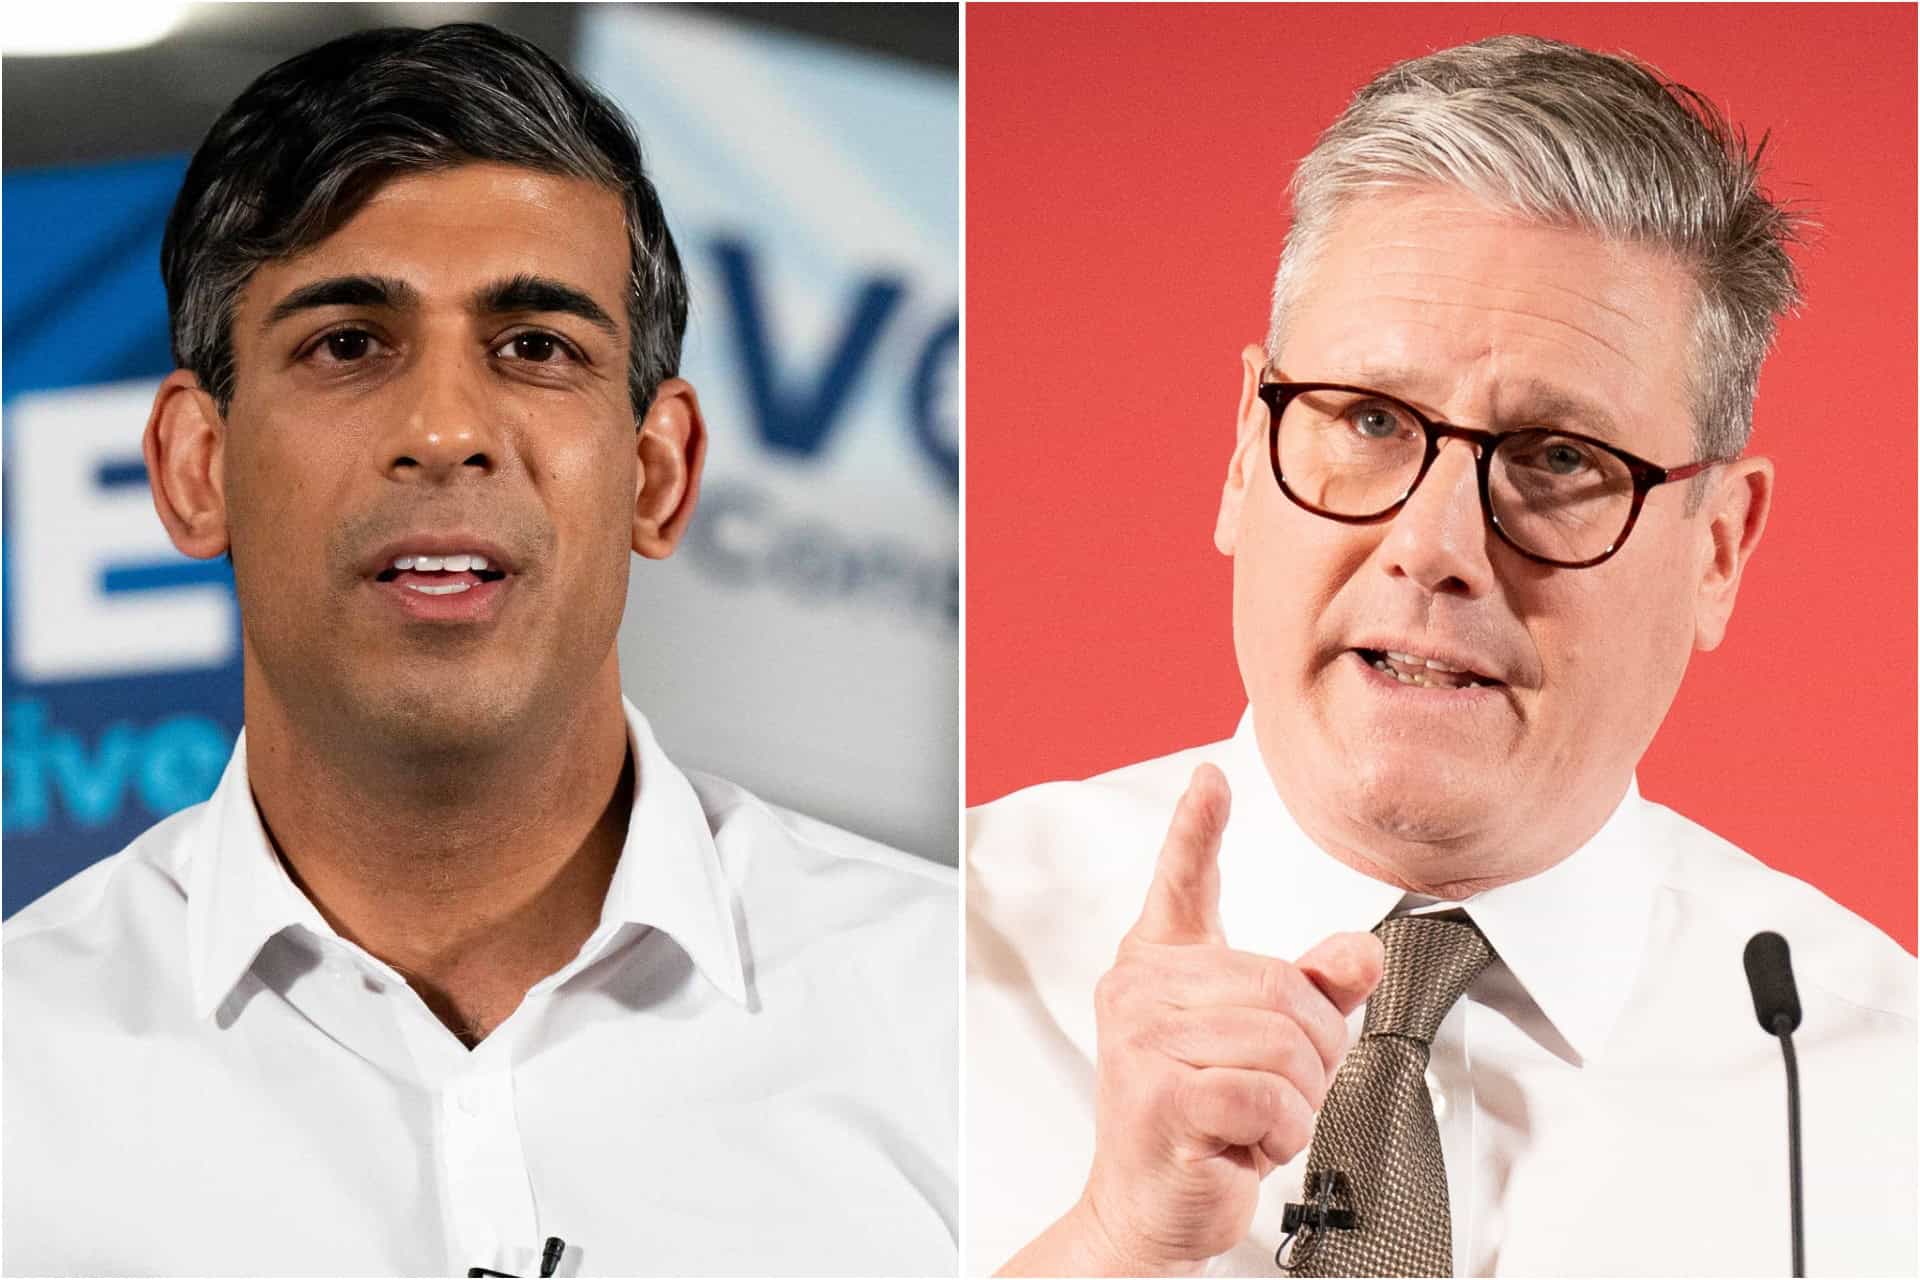 Sunak and Starmer agree to ITV debate on June 4